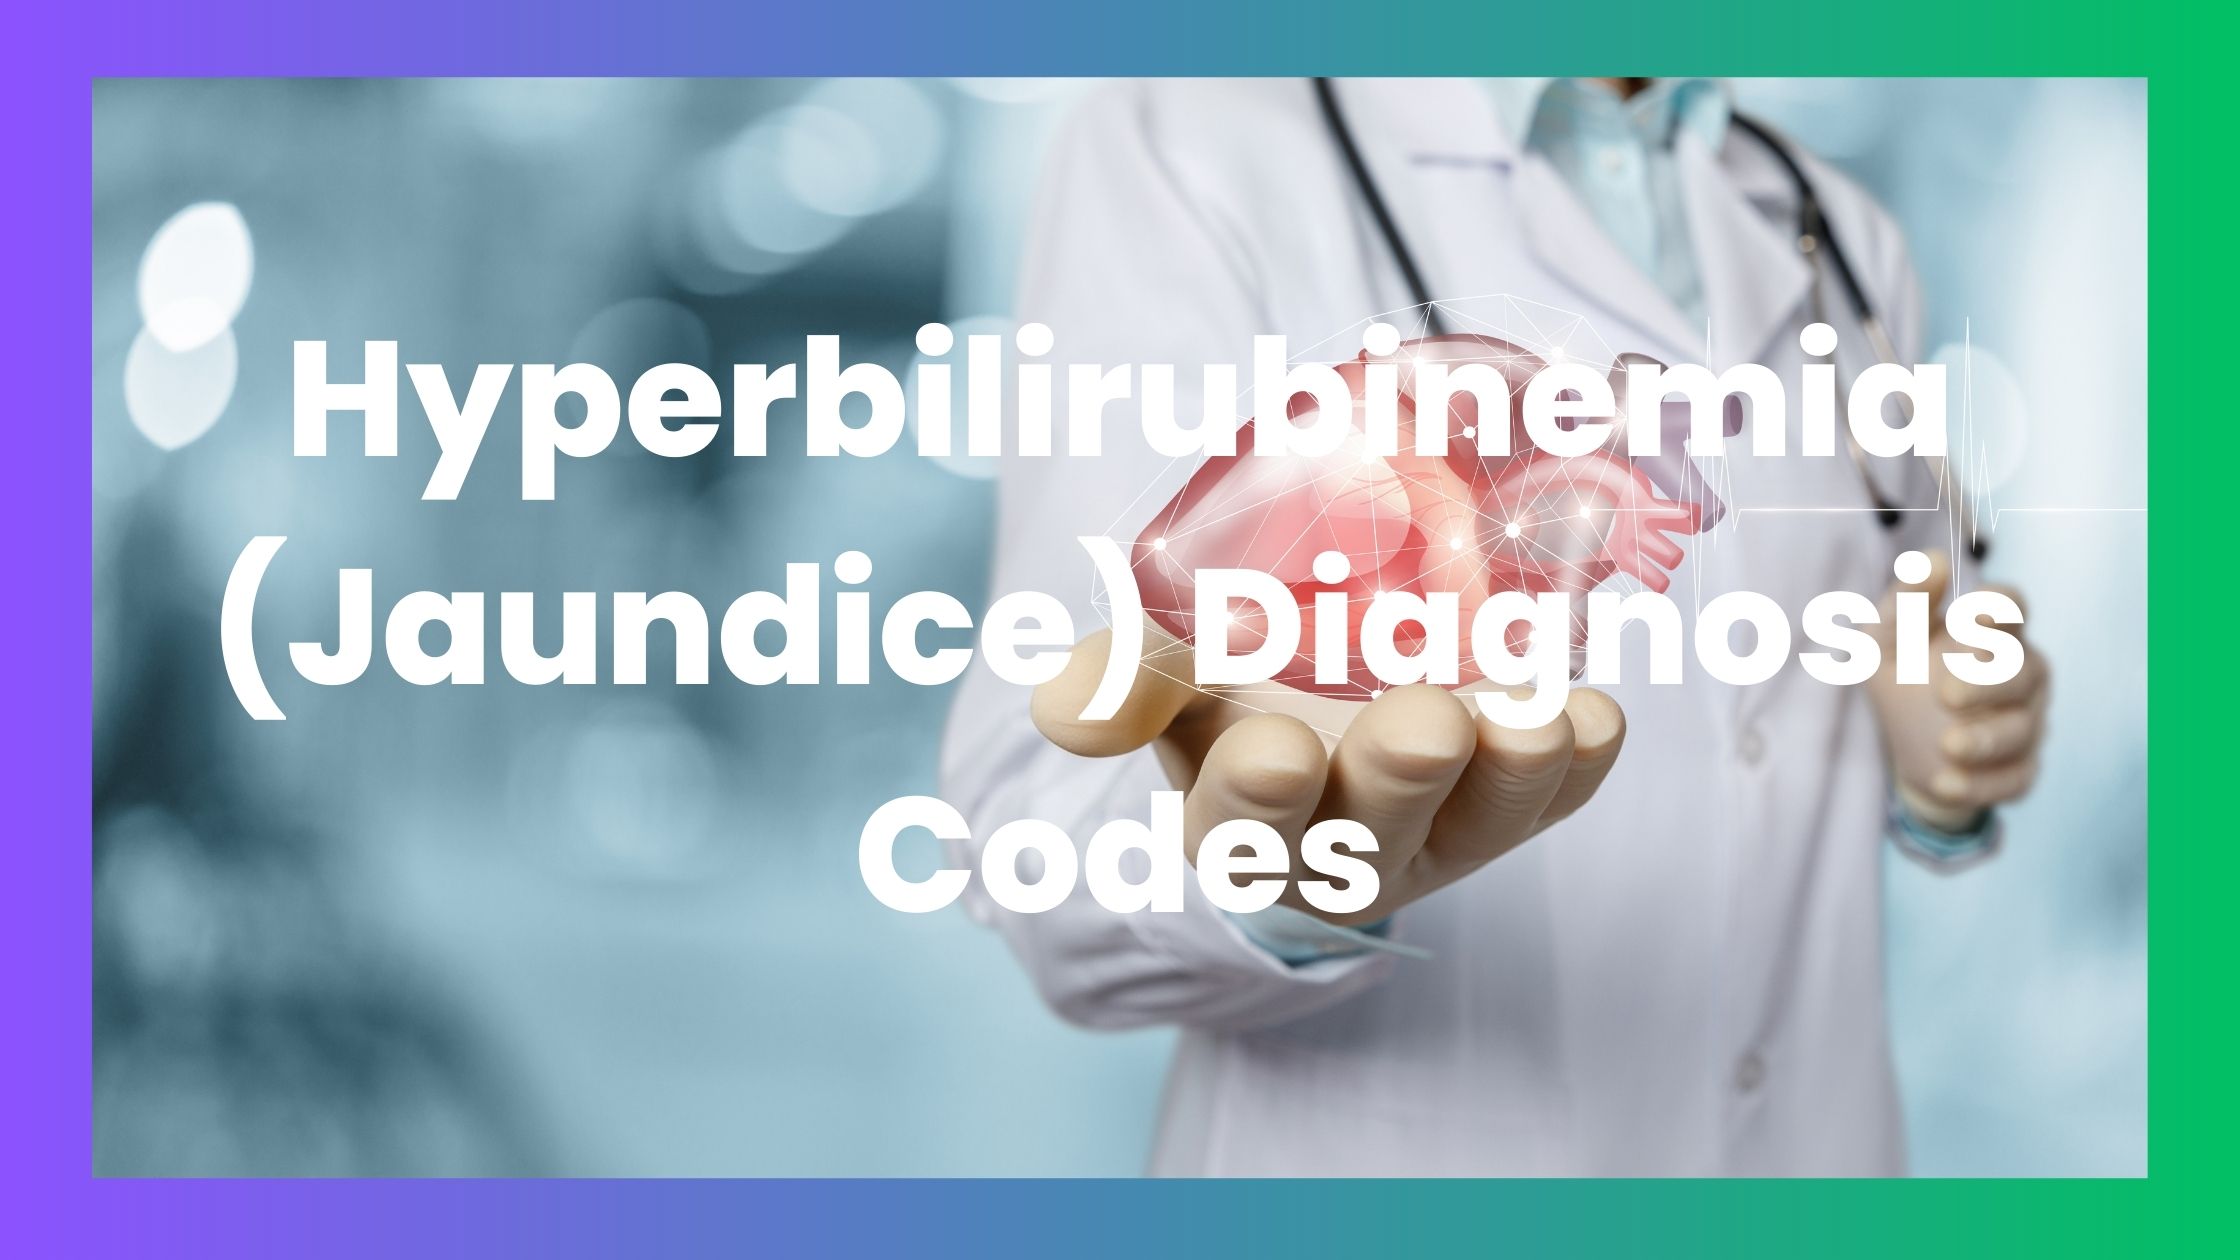 Hyperbilirubinemia or jaundice icd10 CM codes